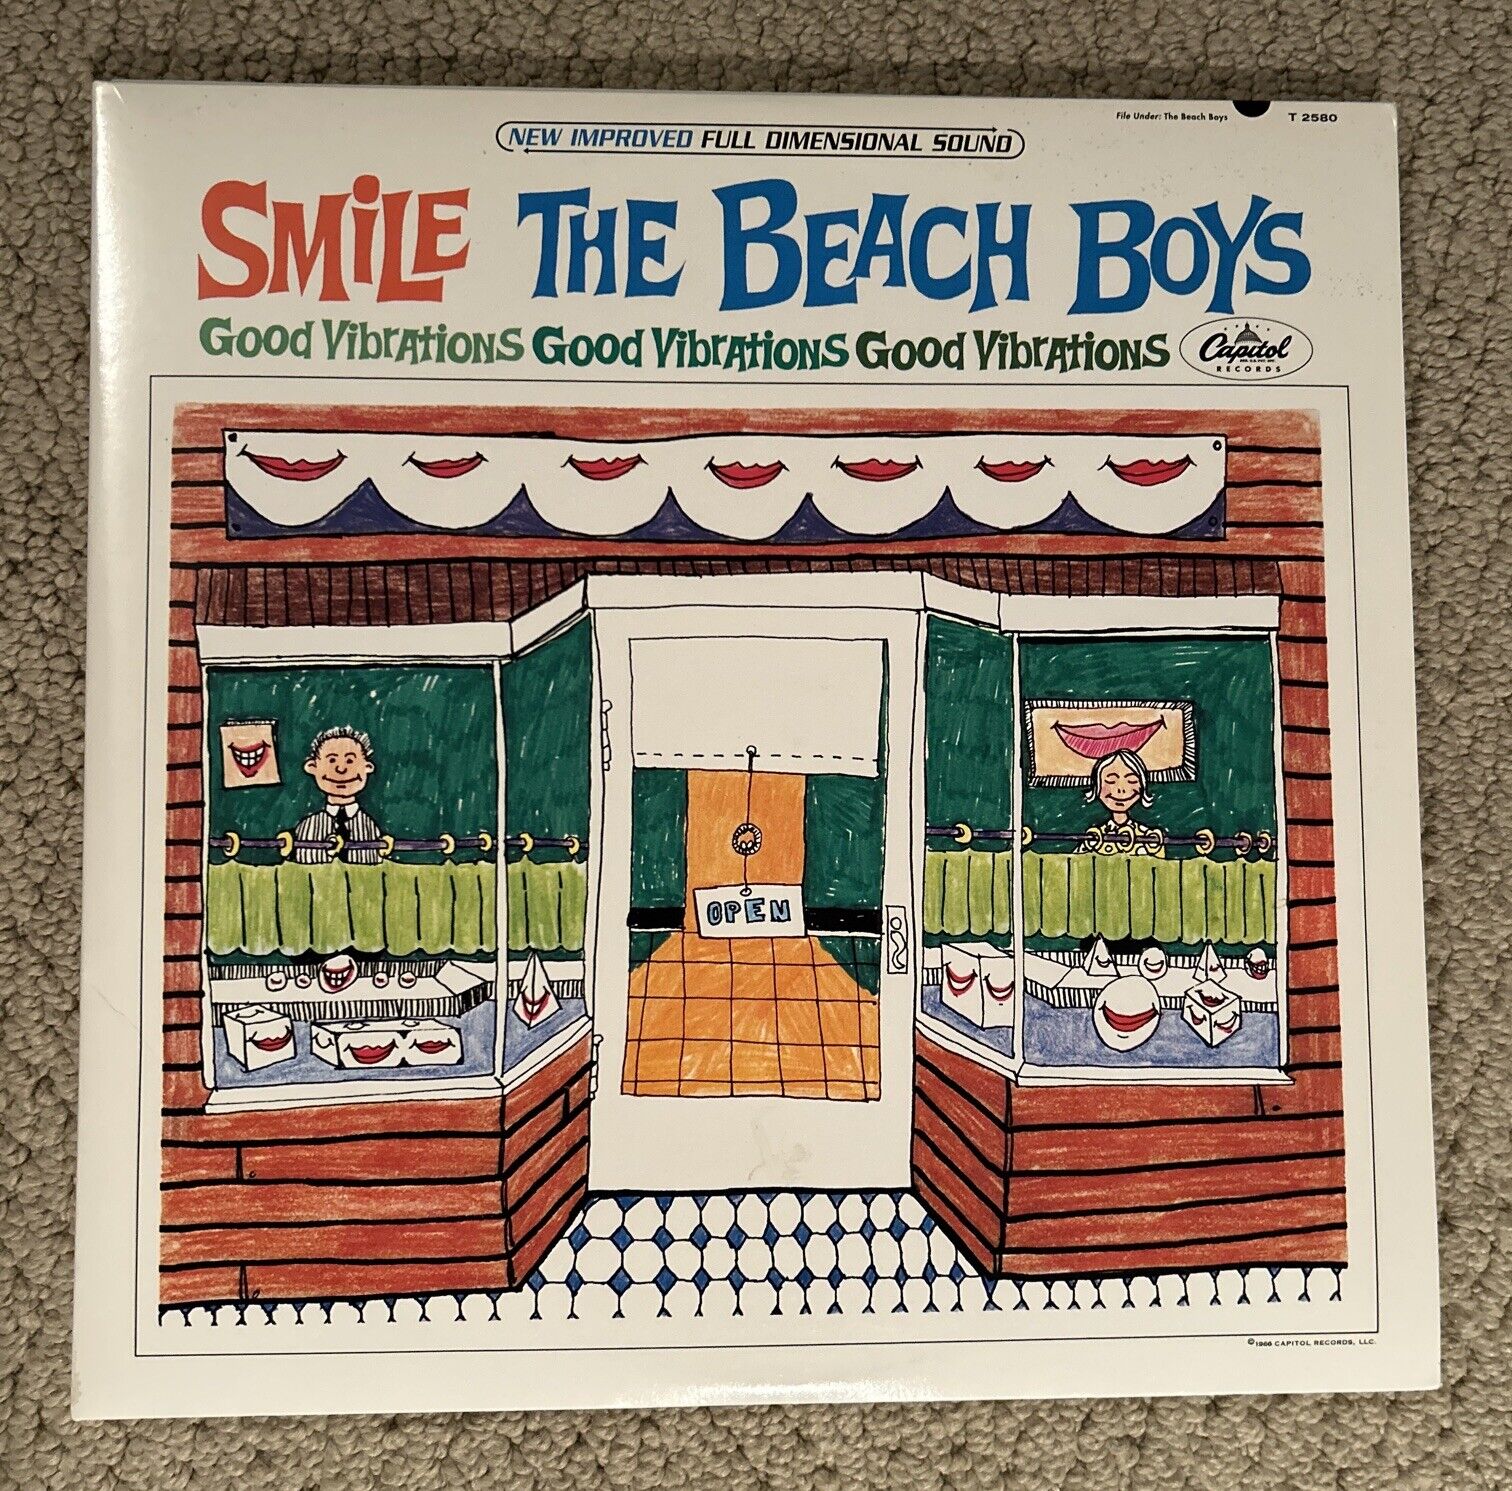 The Smile Sessions Beach Boys Record 2011 EMI T2580 vinyl LP VG+ / EX Unplayed